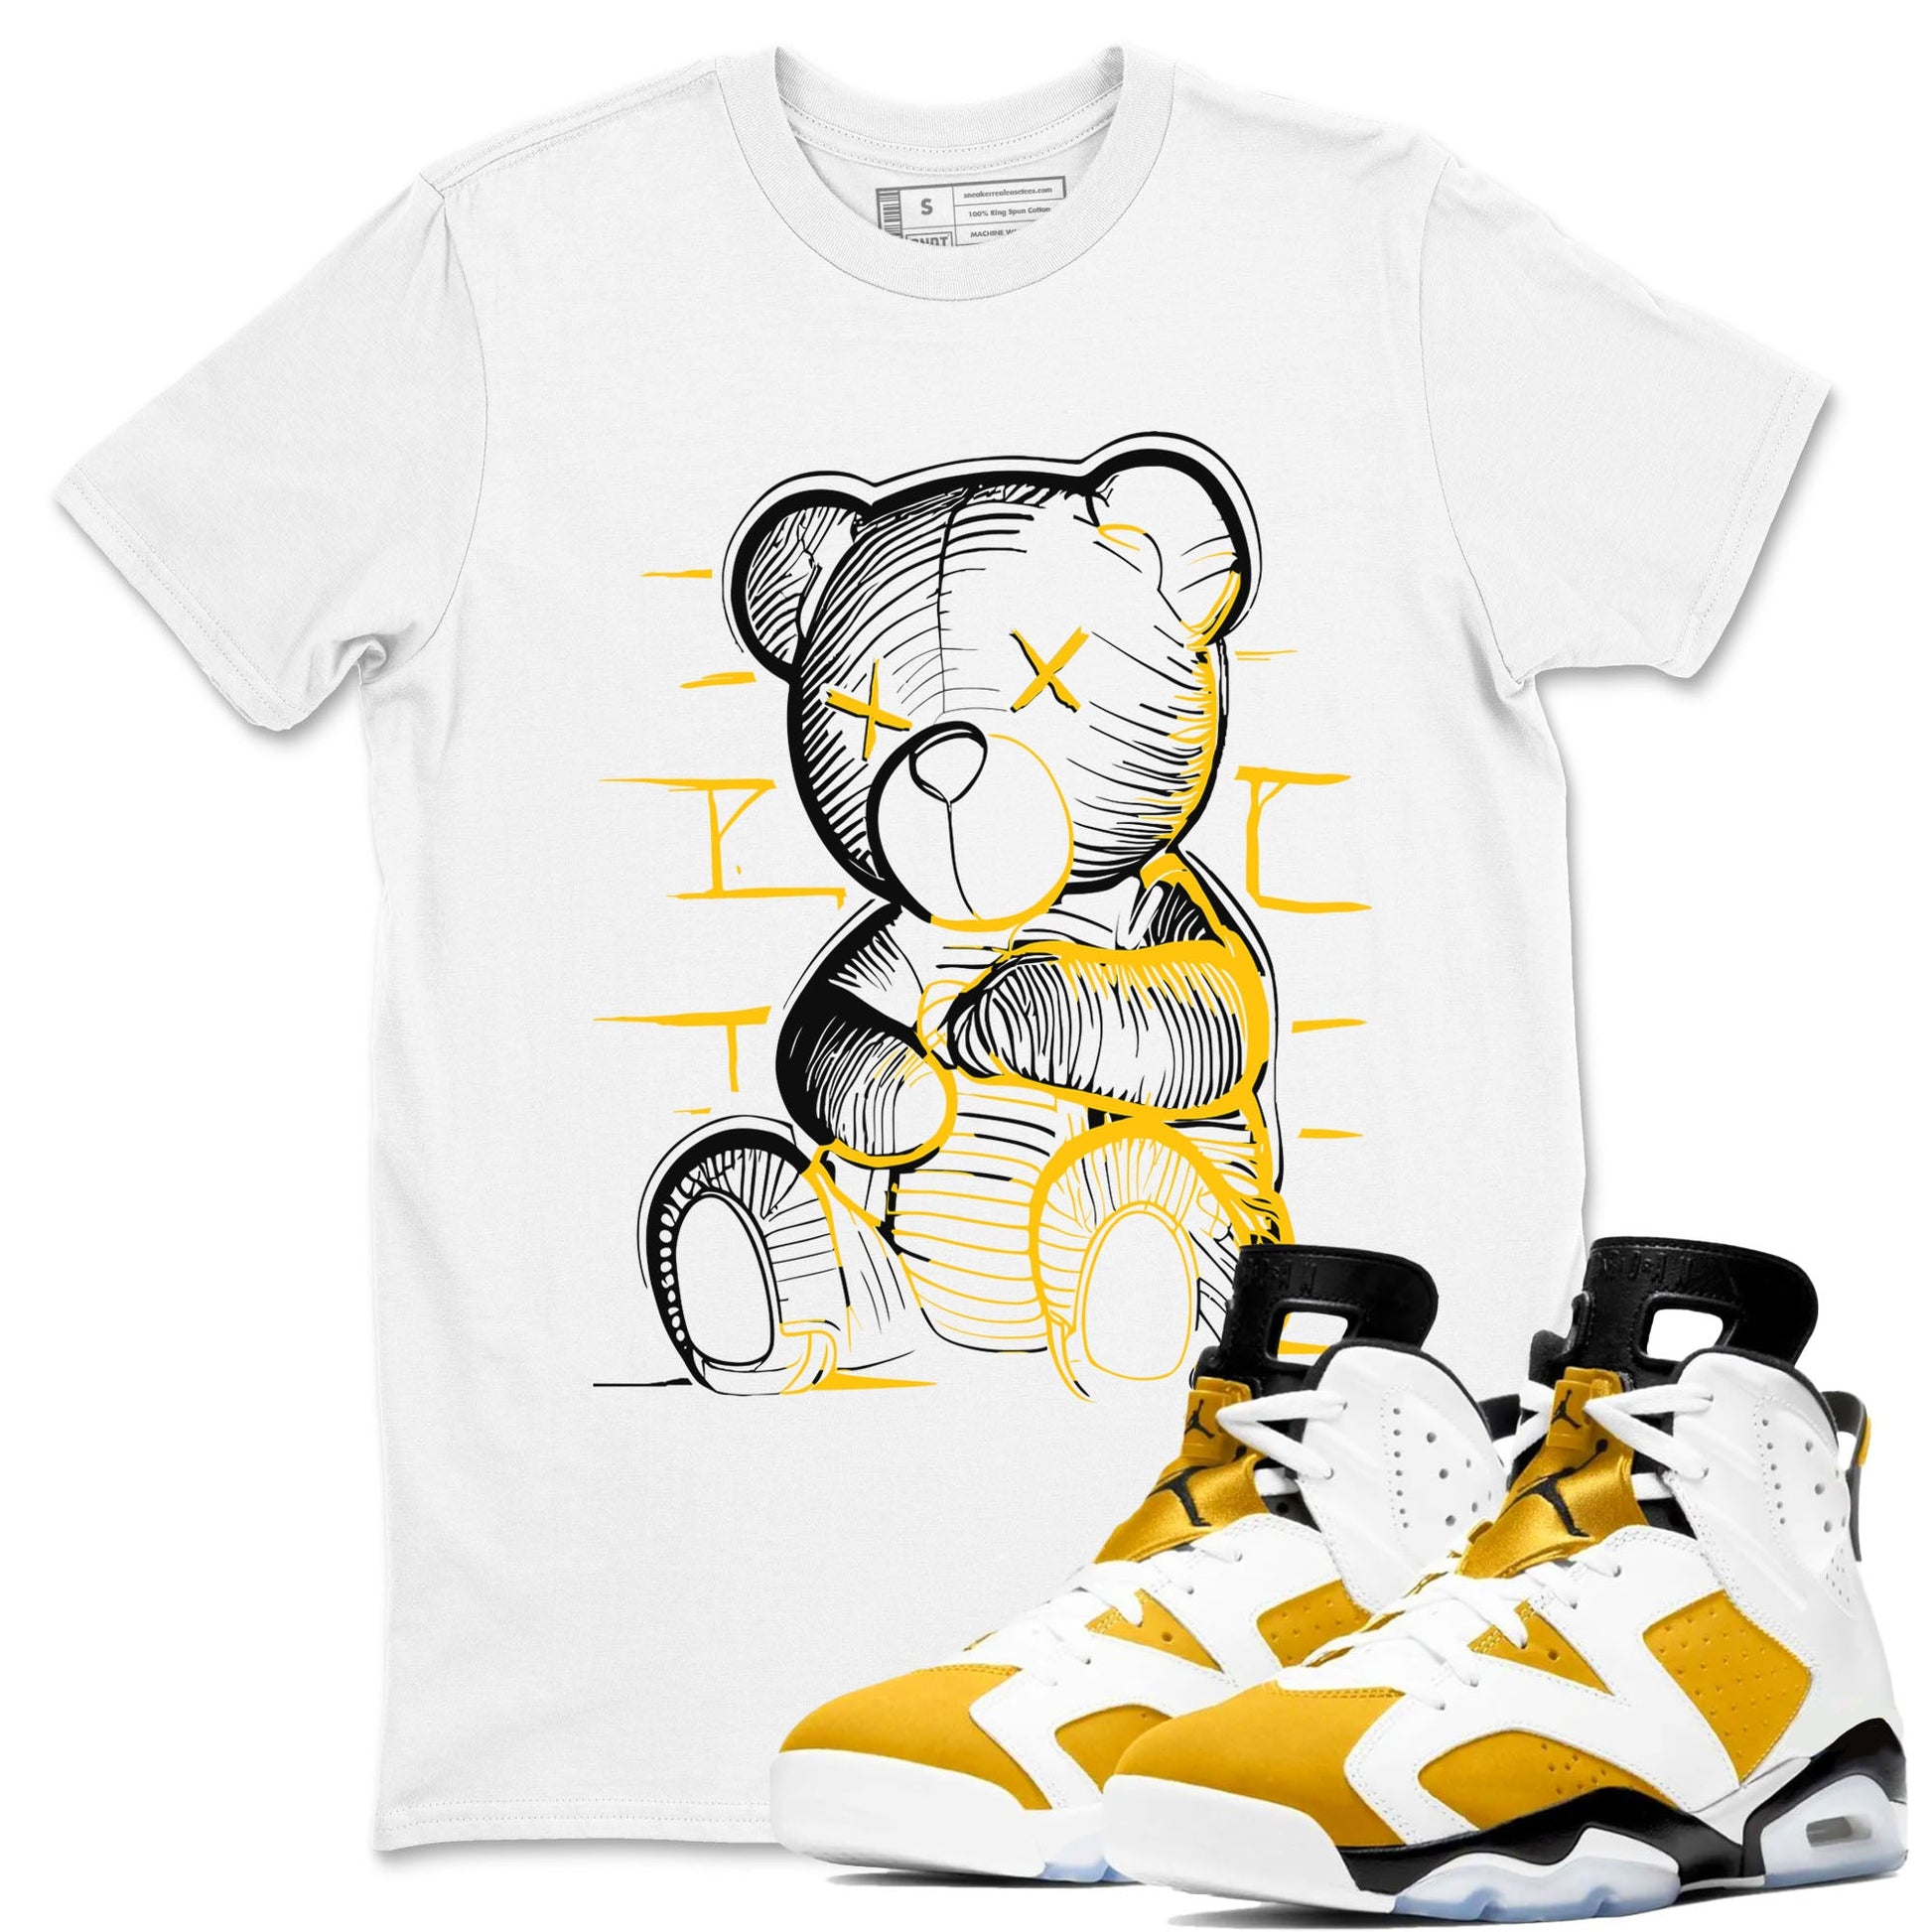 Neon Bear sneaker match tees to Yellow Ochre 6s street fashion brand for shirts to match Jordans SNRT Sneaker Tees Air Jordan 6 Yellow Ochre unisex t-shirt White 1 unisex shirt